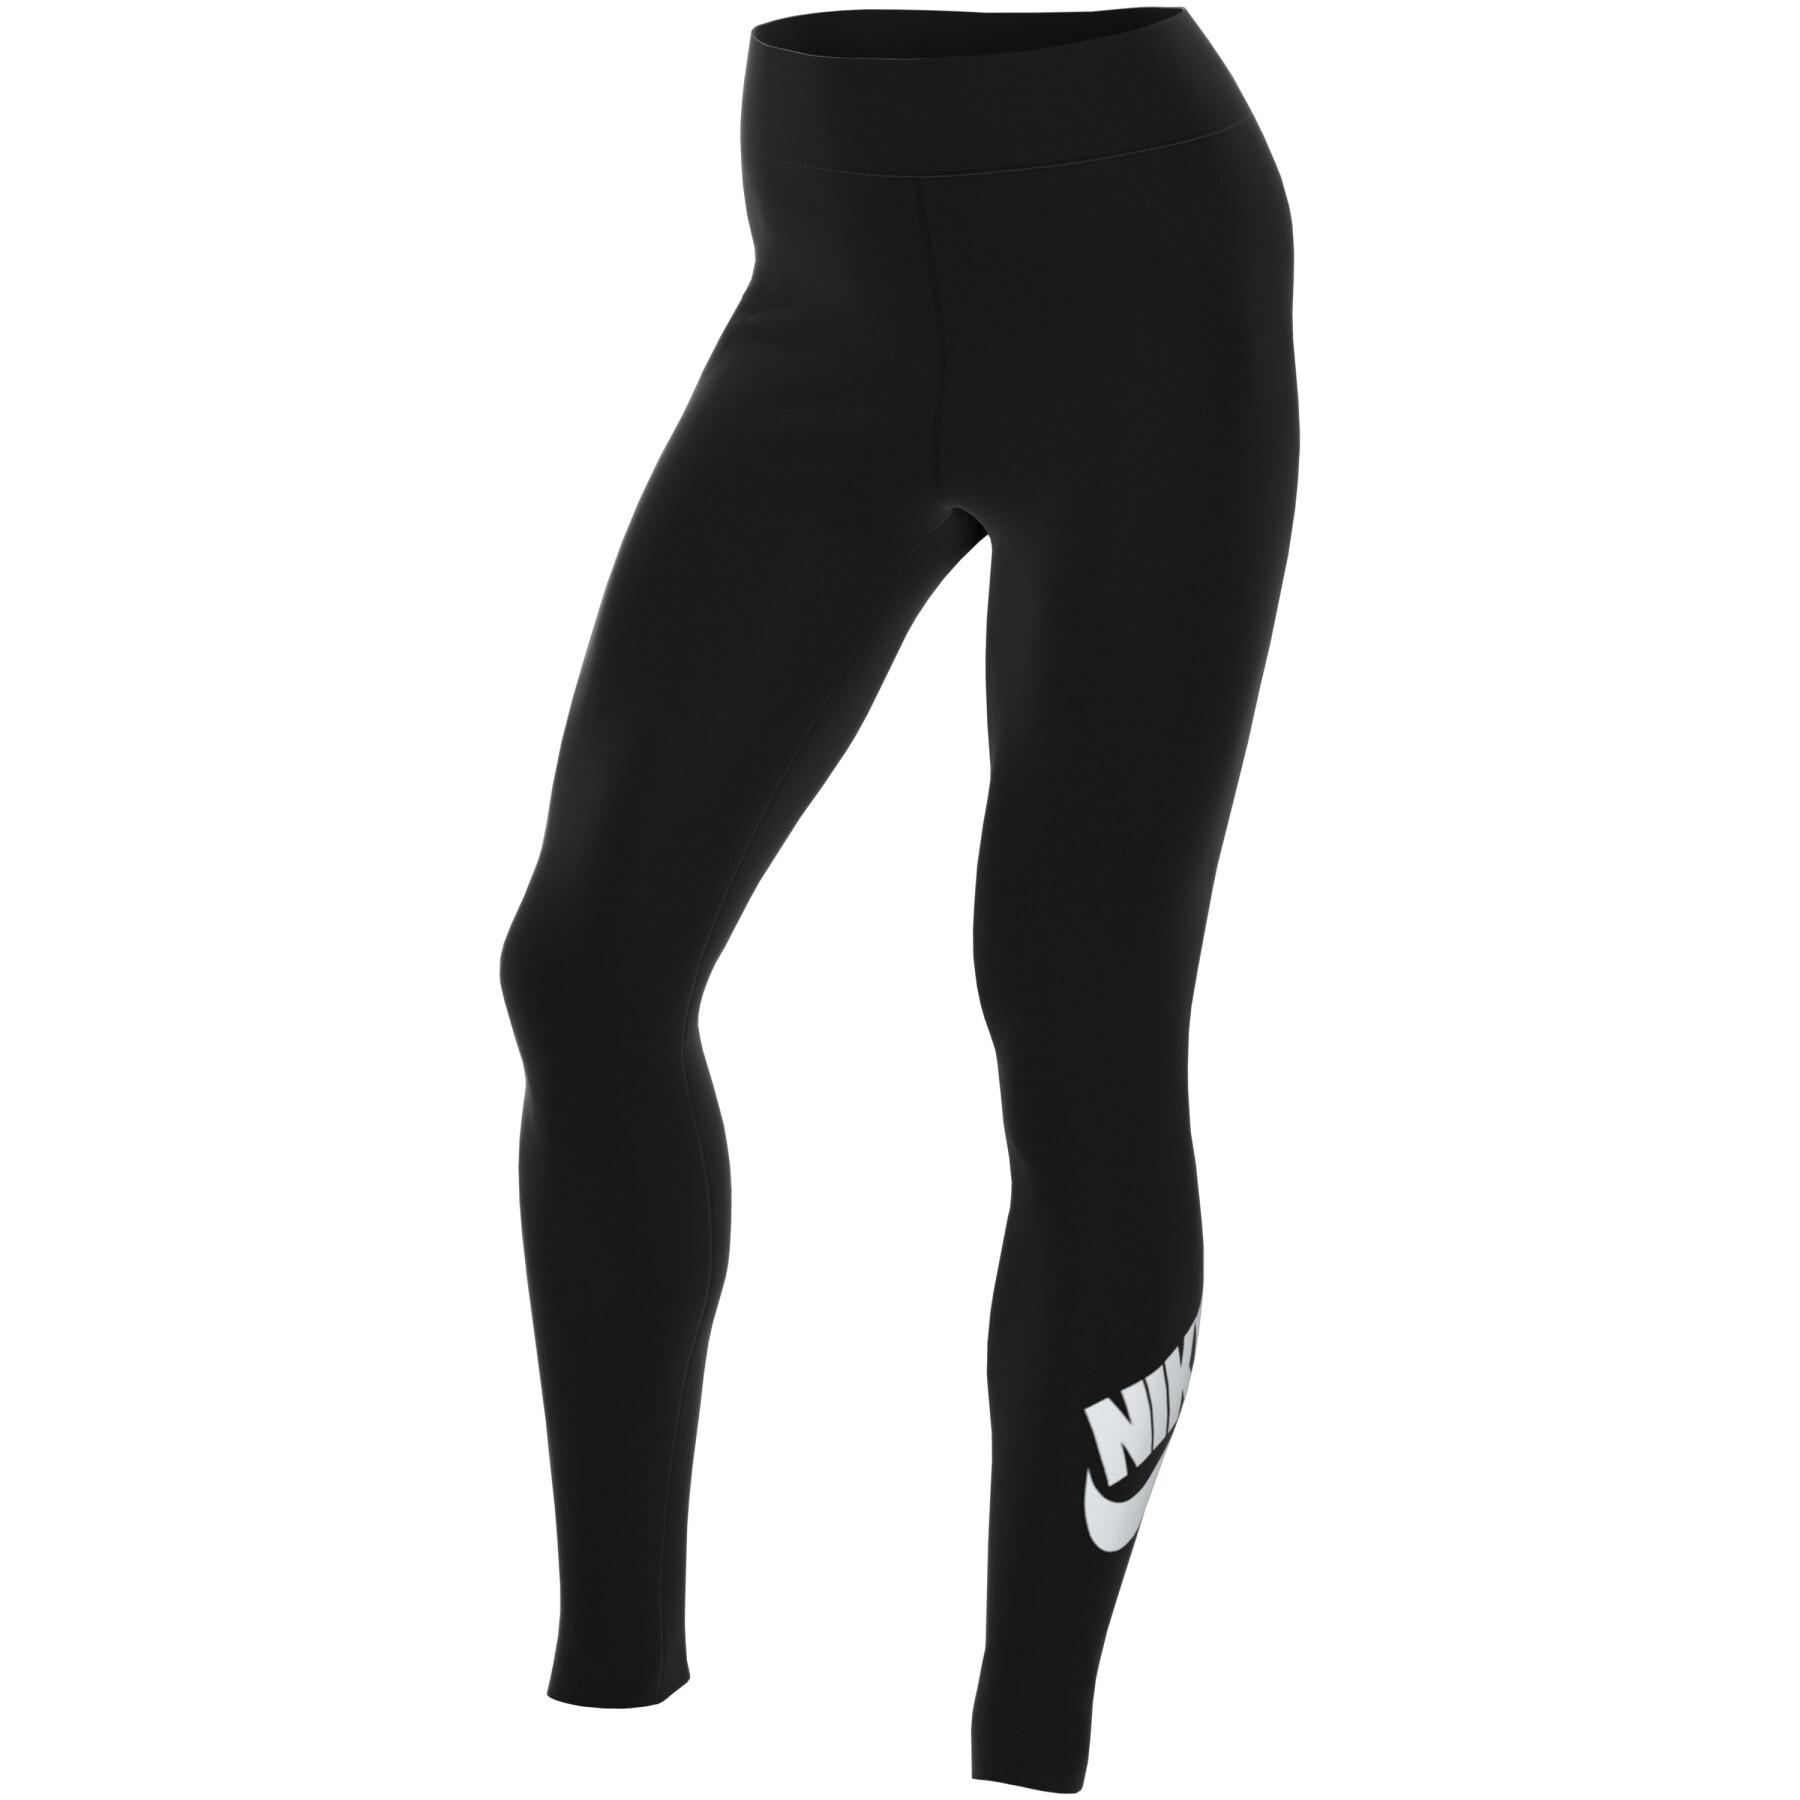 Women's Legging Nike sportswear essential - Women's clothing - Lifestyle